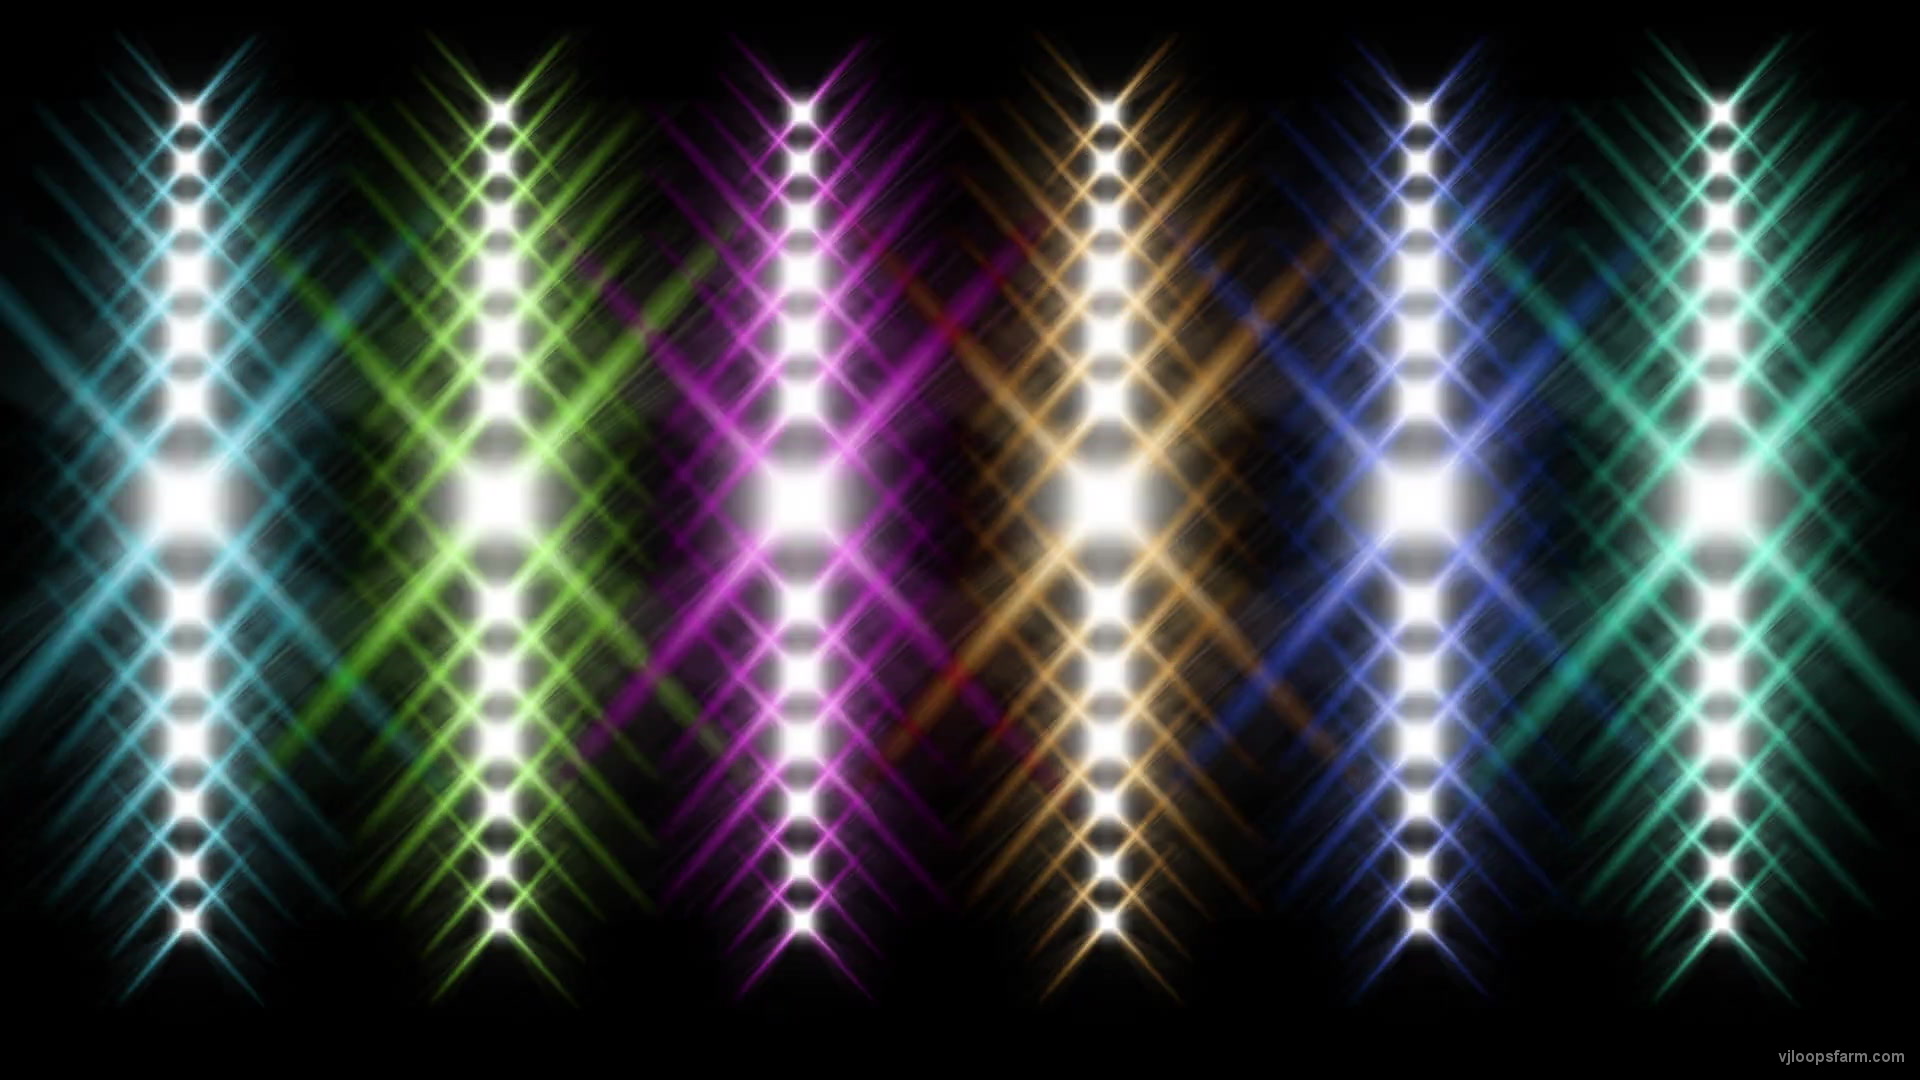 Shine Lights columns PSY Colors pattern blinking Ultra HD VJ Loop